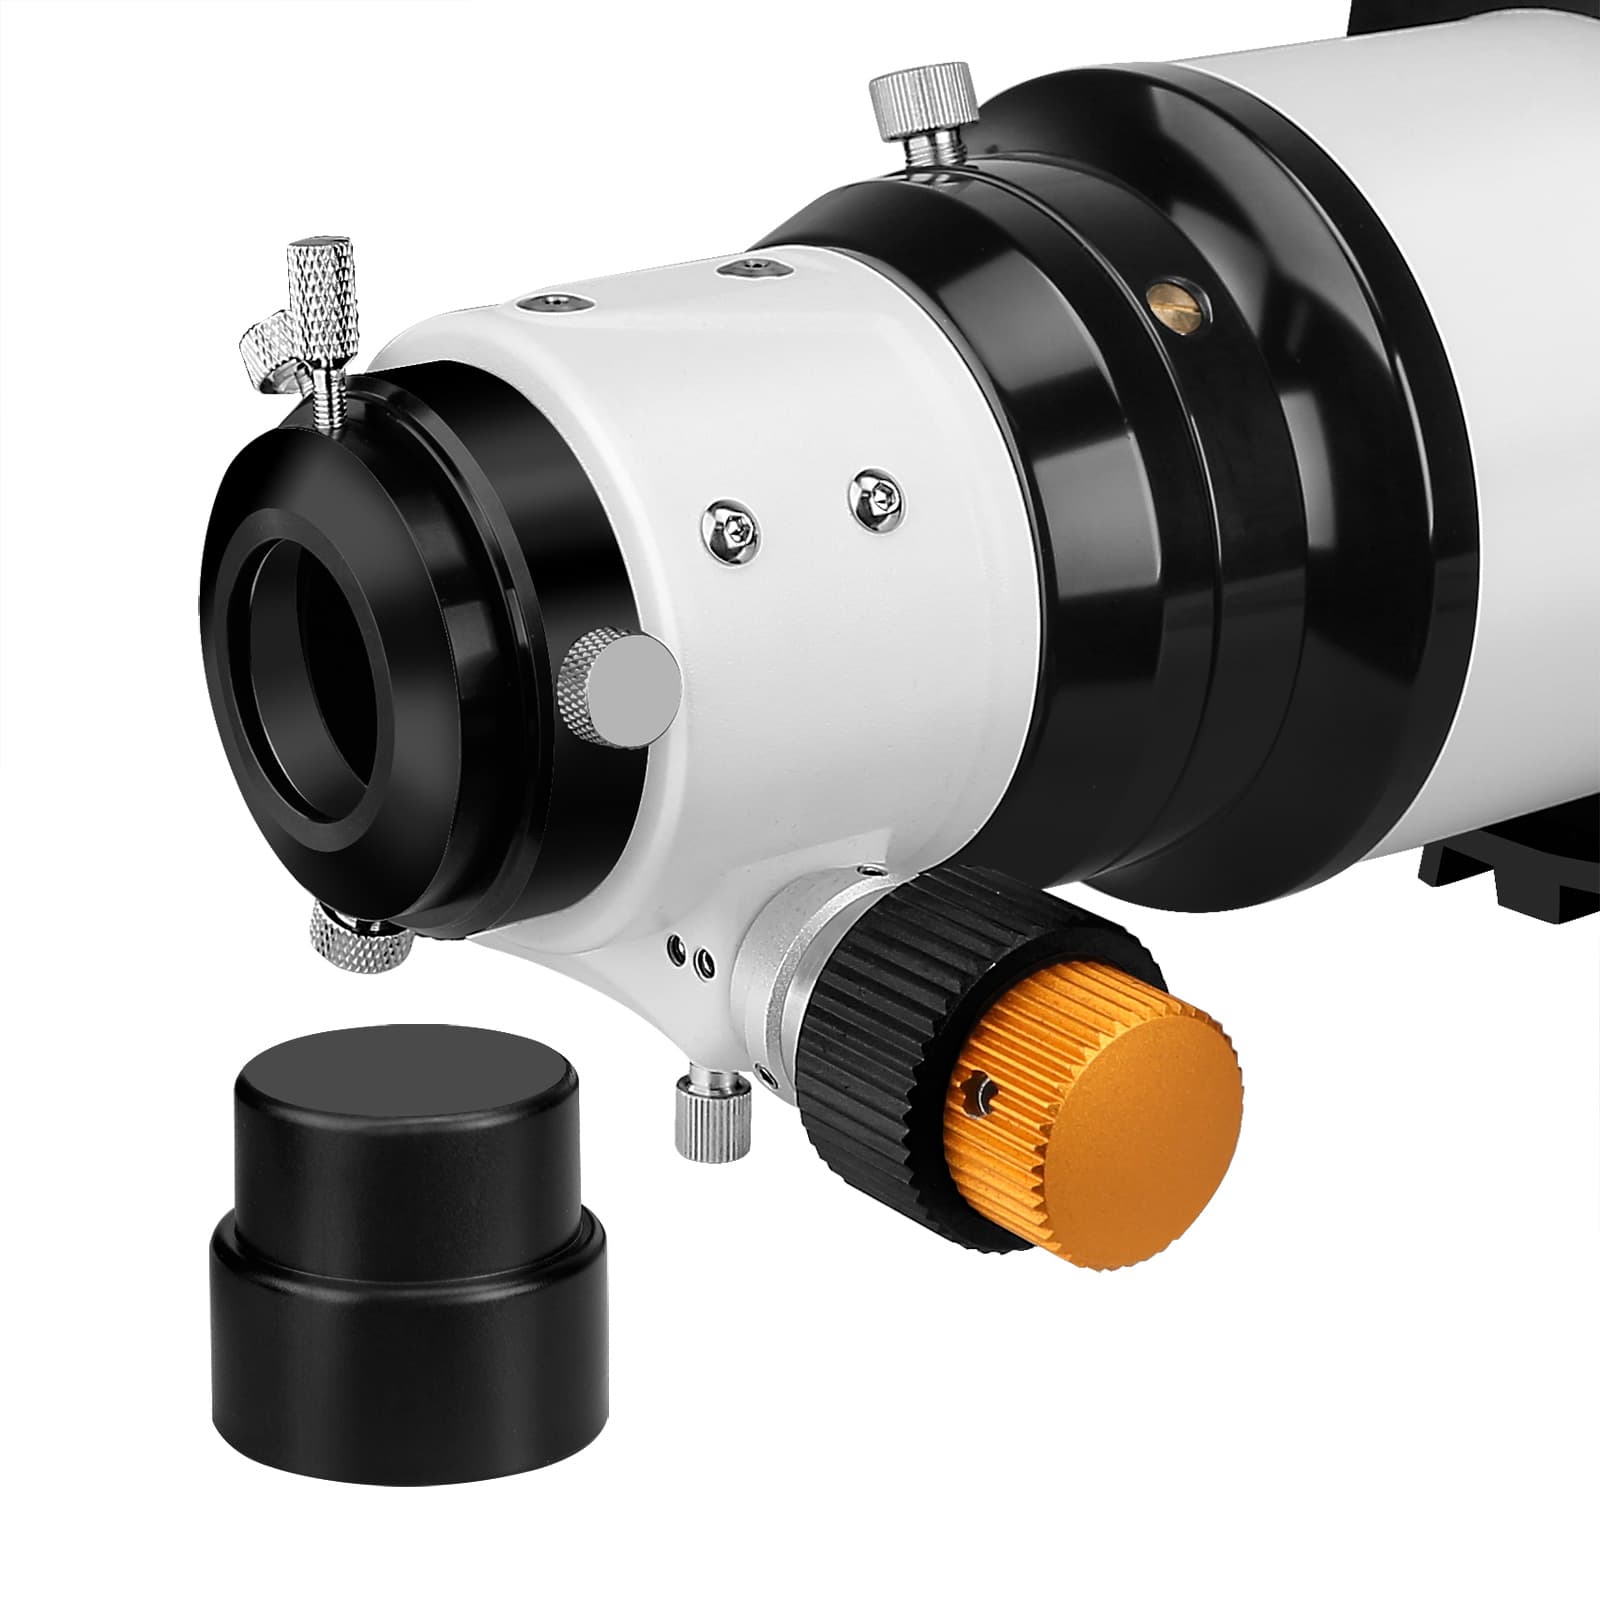 Svbony SV503 Telescope ED 102mm F7 Doublet Refractor for Astronomy - F9359D